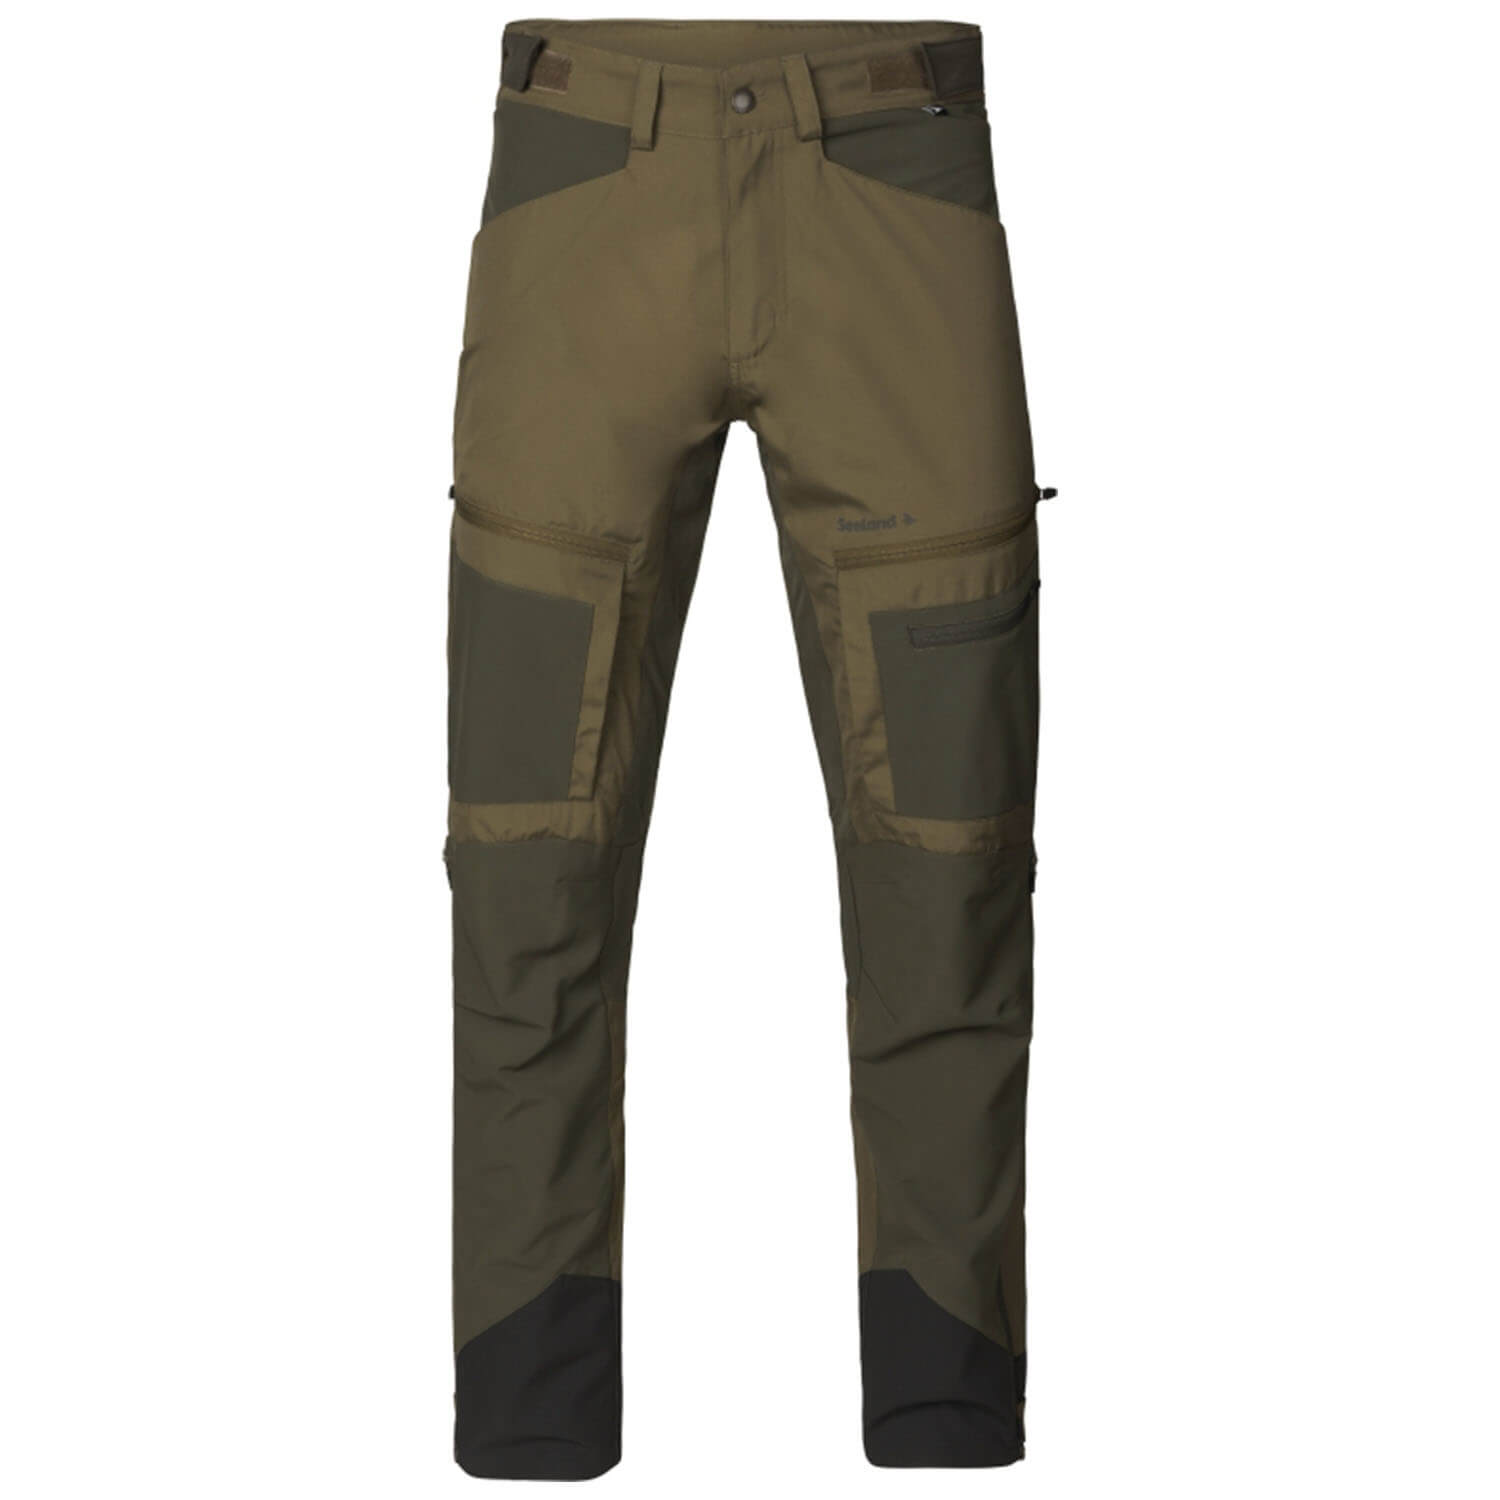 Seeland pants hemlock (Military Olive/Pine Green) -  Roe Buck Hunting